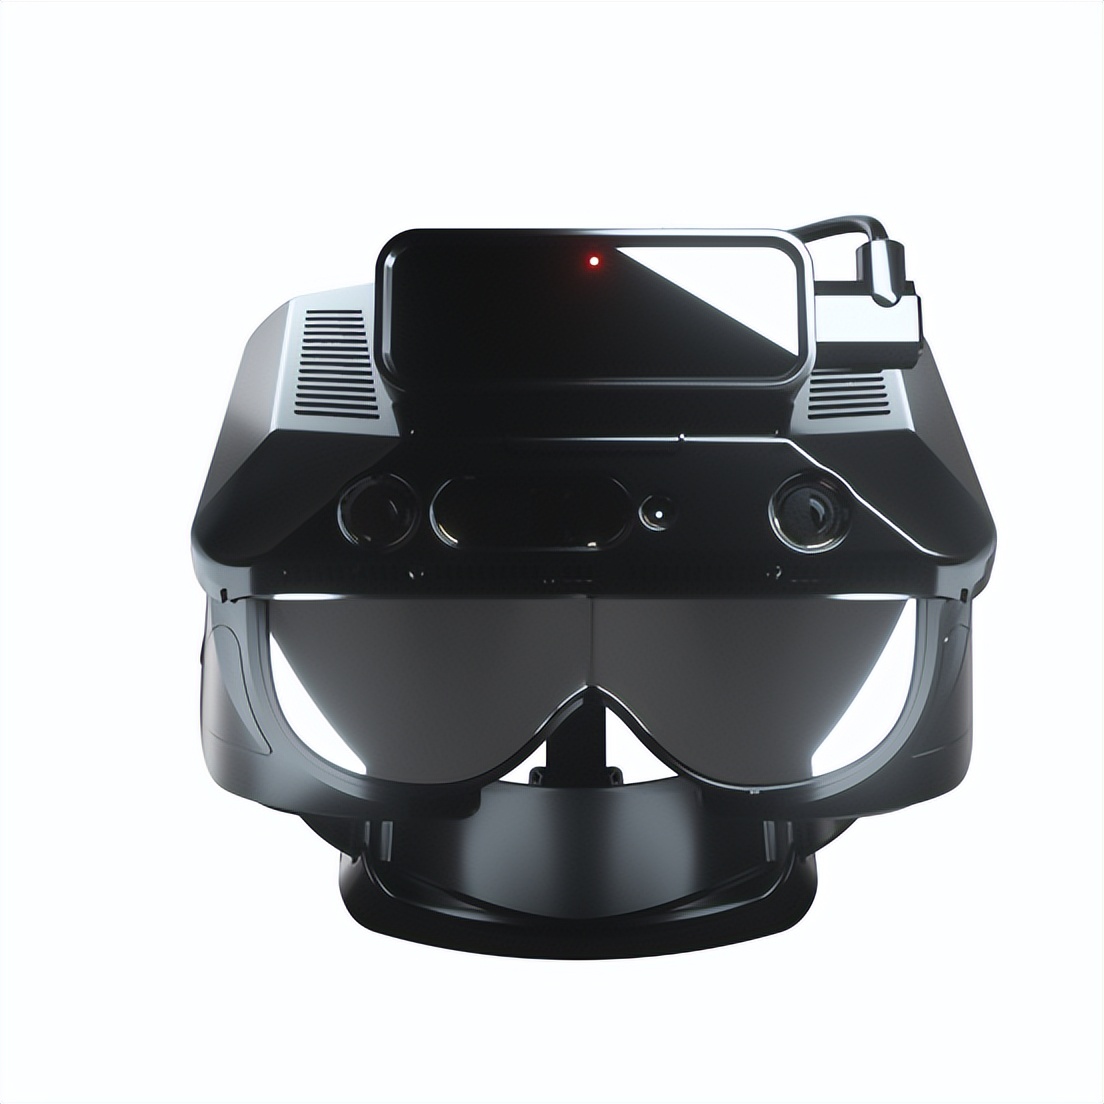 Realmax携明星产品参加AR/VR技术创变趋势峰会，再掀高潮